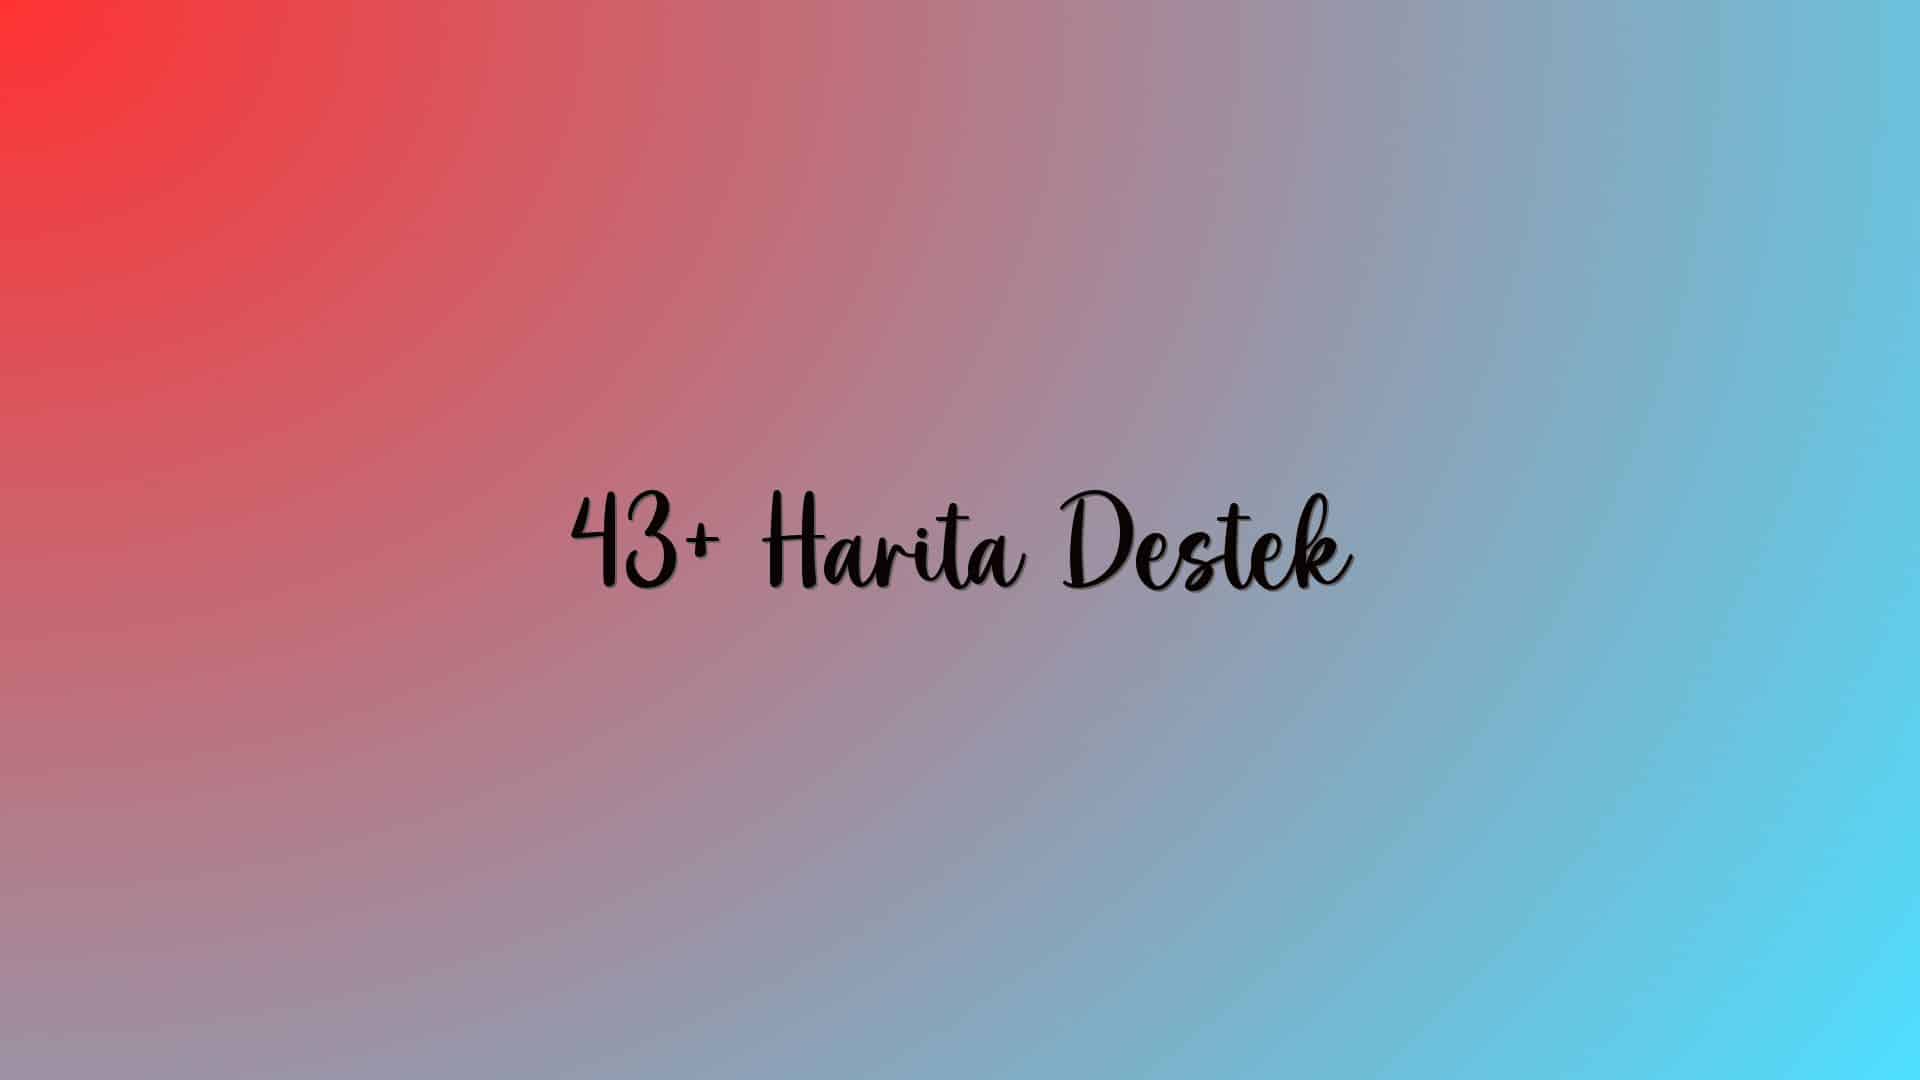 43+ Harita Destek